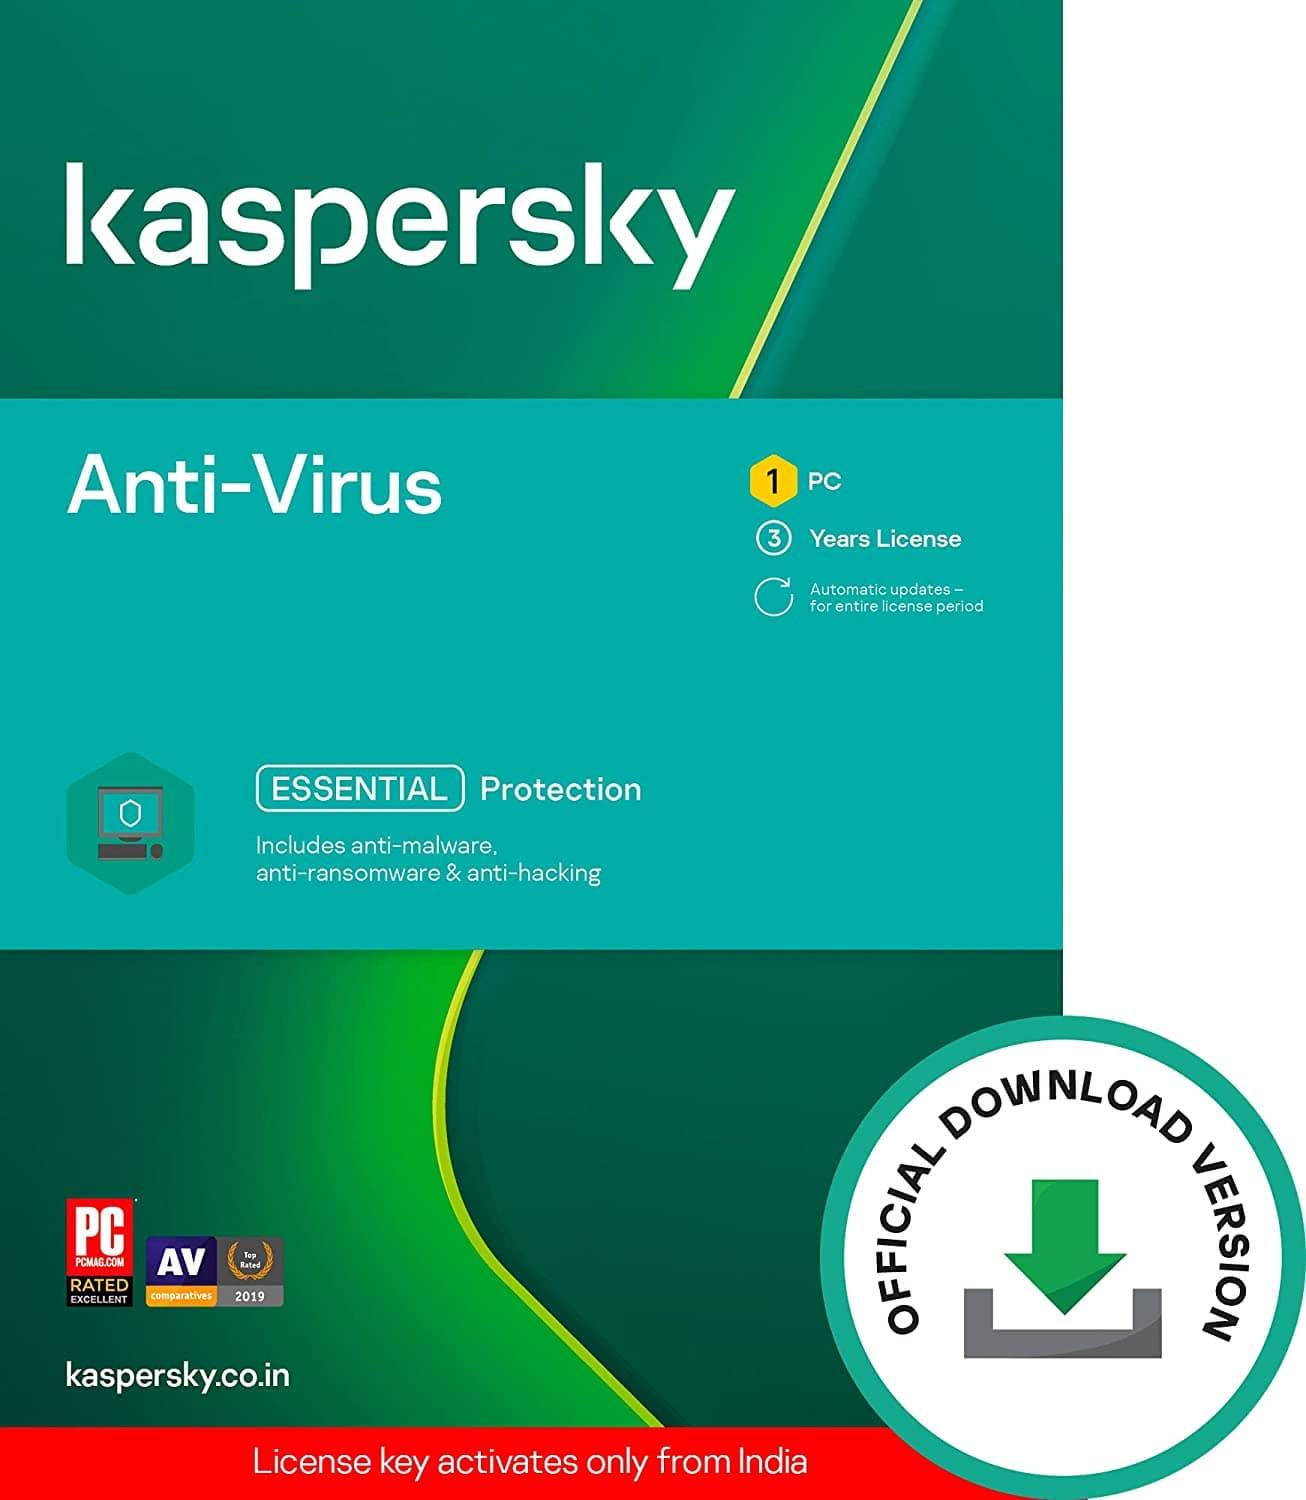 Kaspersky Anti-Virus Latest Version - 1 User, 3 Years (Code emailed in 2 Hours - No CD)-Anti Virus Softwares-dealsplant